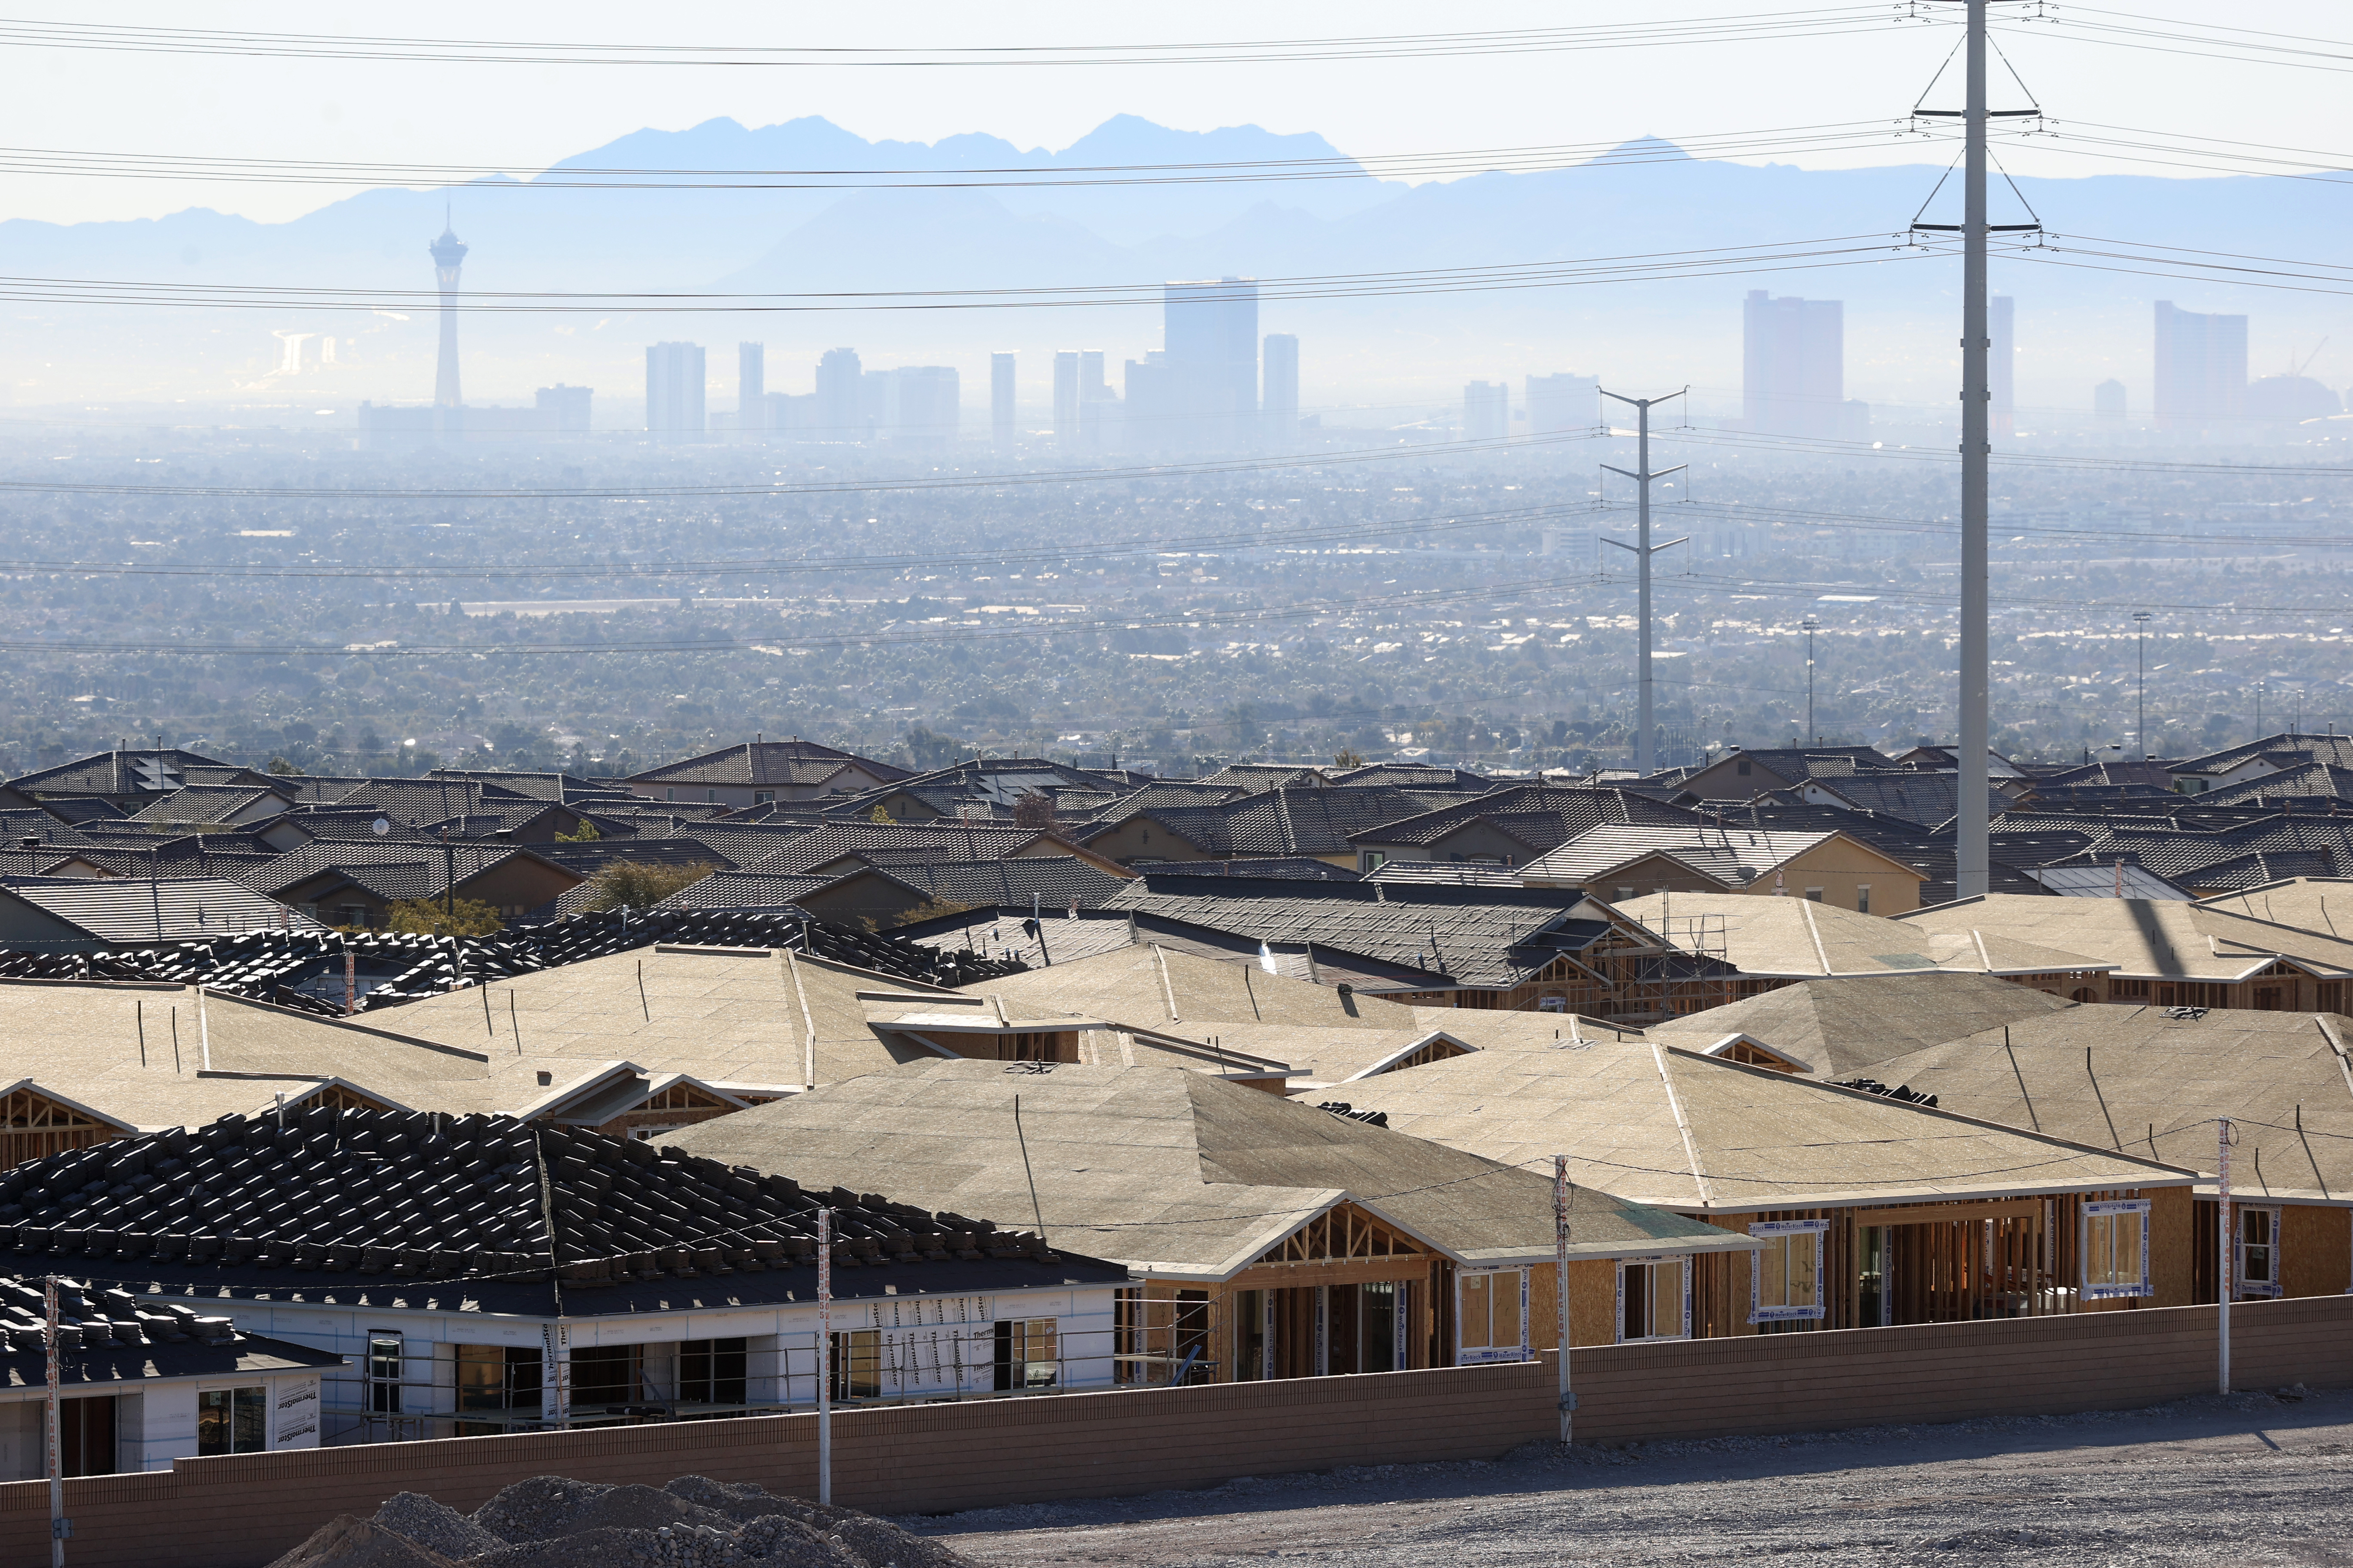 Tingkat hipotek jatuh, tetapi pasar perumahan Las Vegas masih mengerem